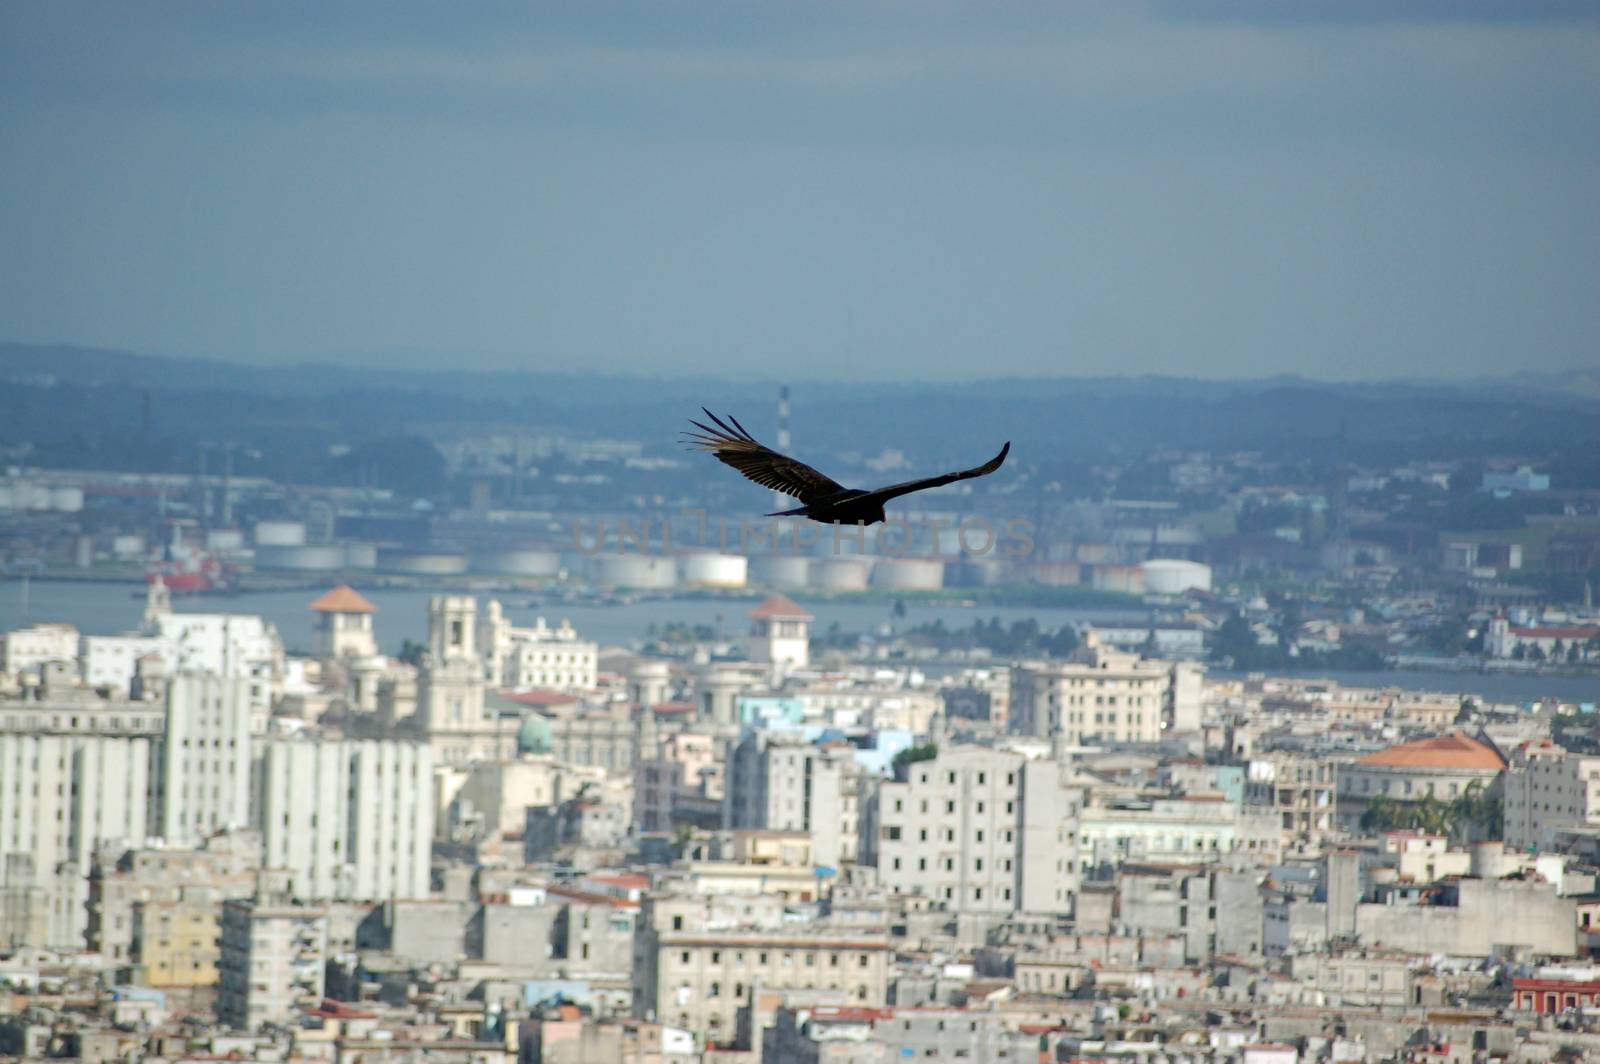 Vulture over Havana by BasPhoto